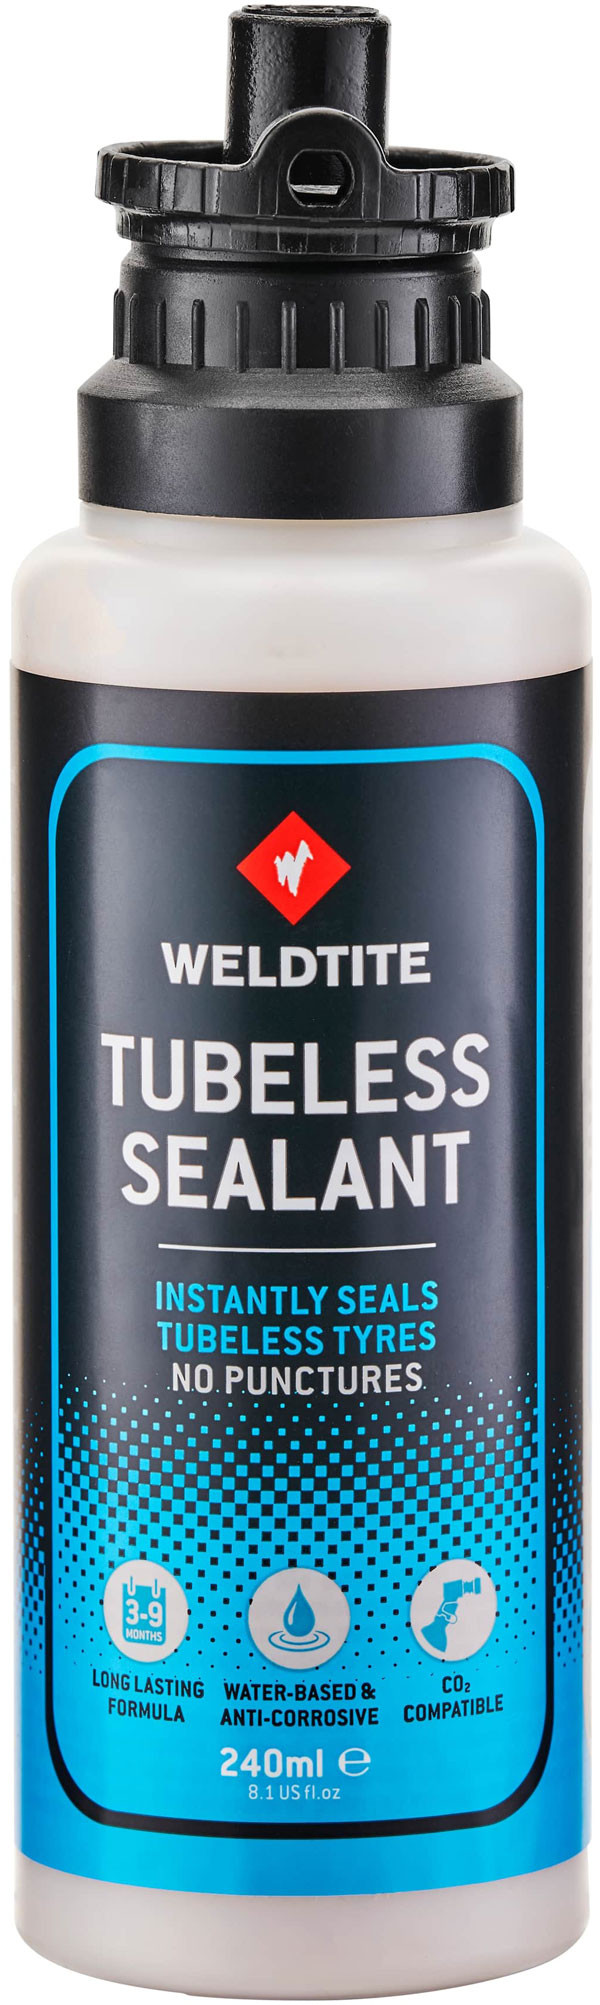 Weldtite Tubeless Tyre Sealant - 240ml